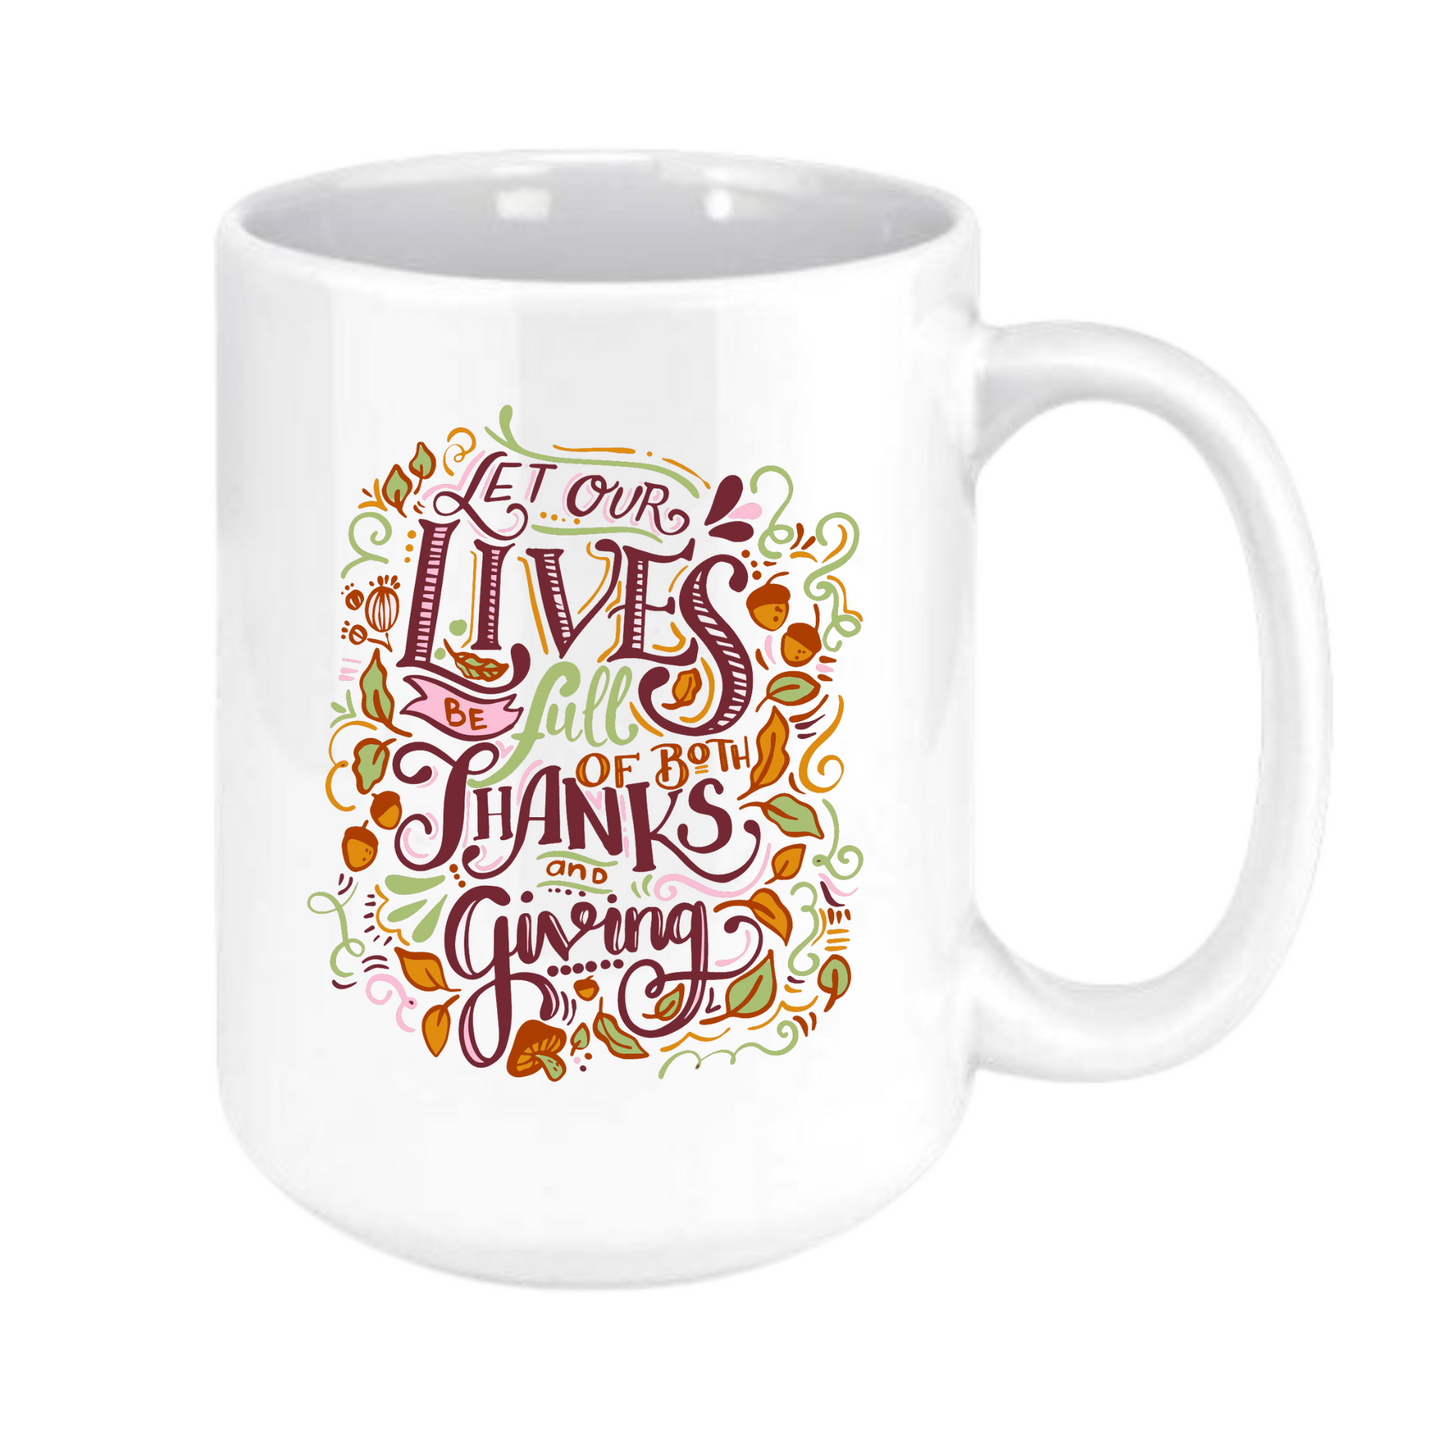 Let our Lives be Full of... Mug